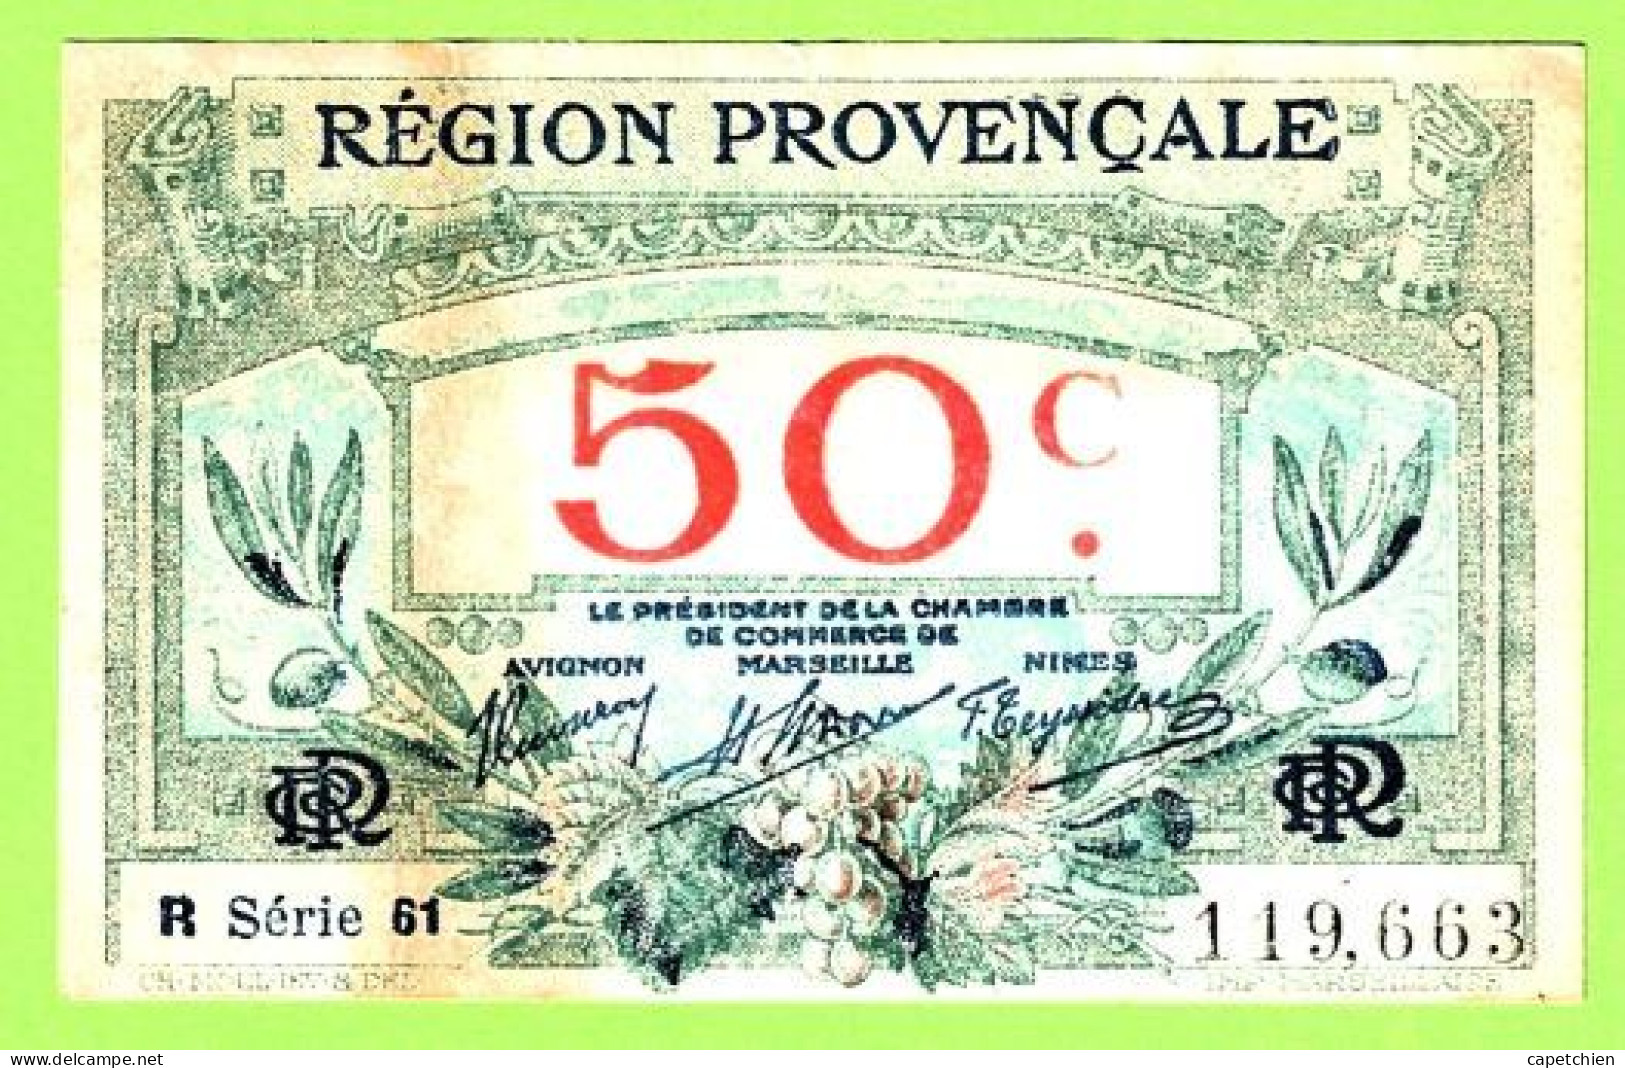 FRANCE / CHAMBRE De COMMERCE / REGION PROVENCALE / 50 CENTIMES / 119663 / R  SERIE 61 - Handelskammer